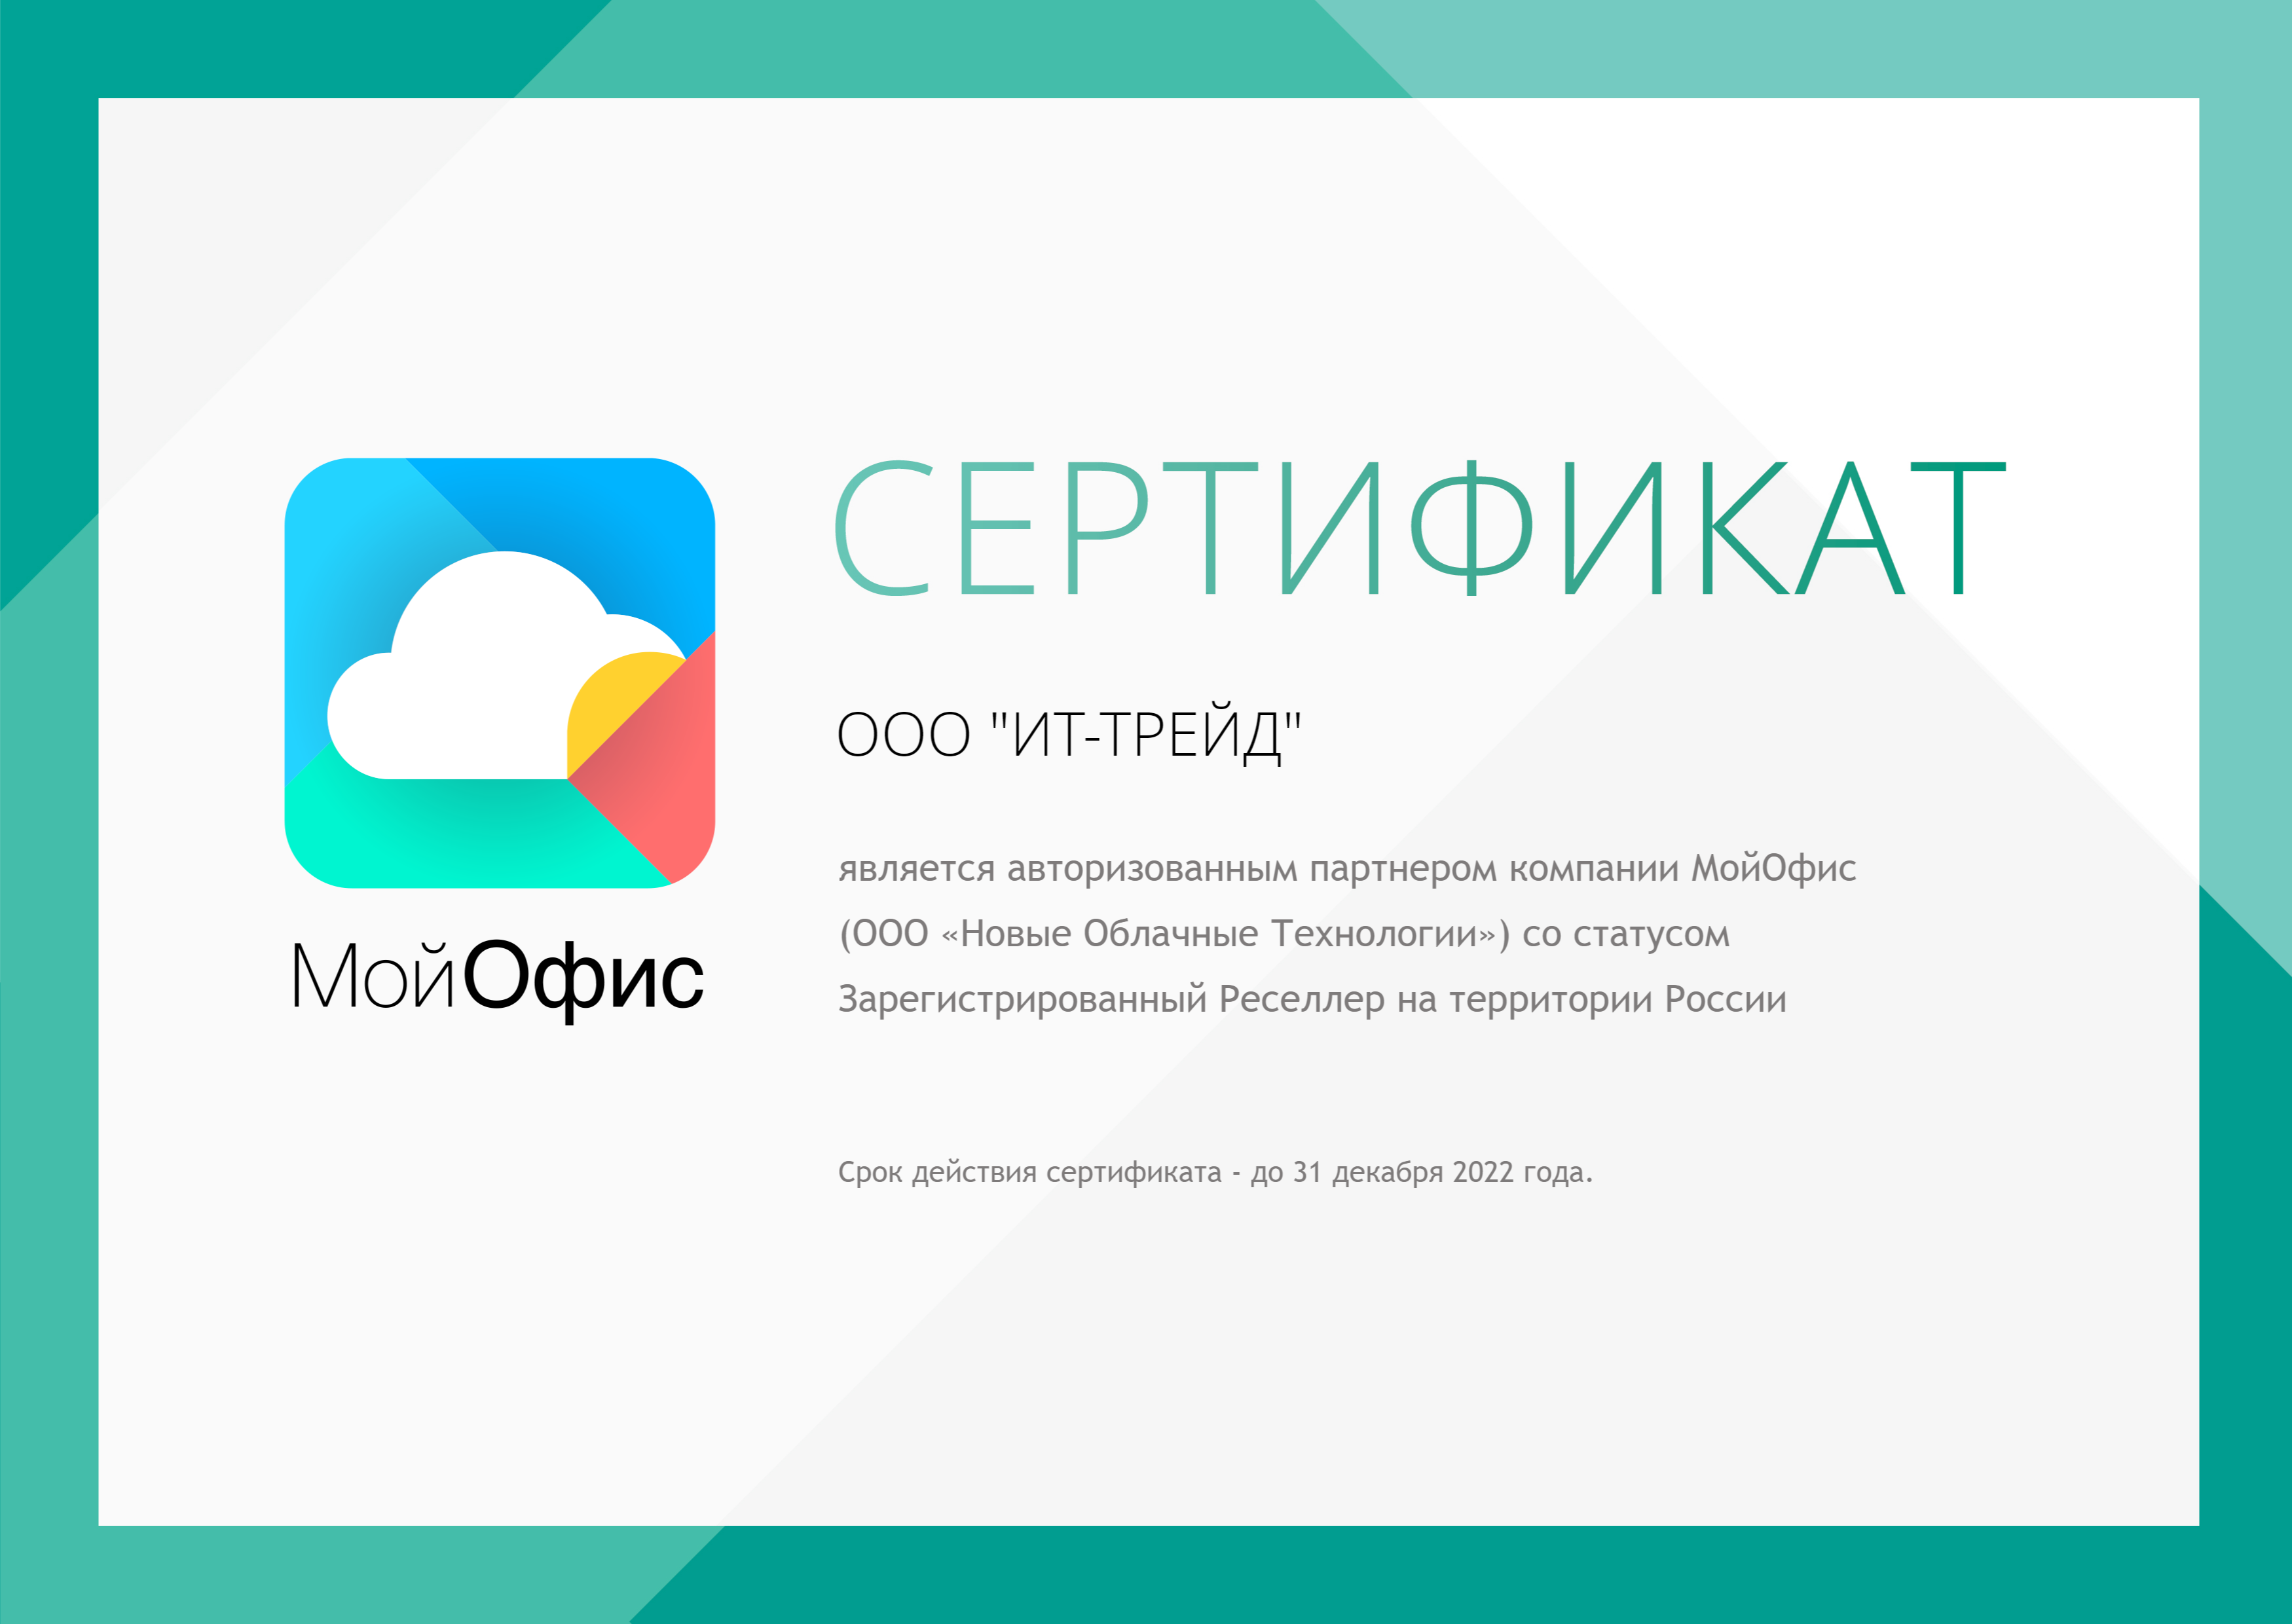 certificate_sav@digt.ru.png